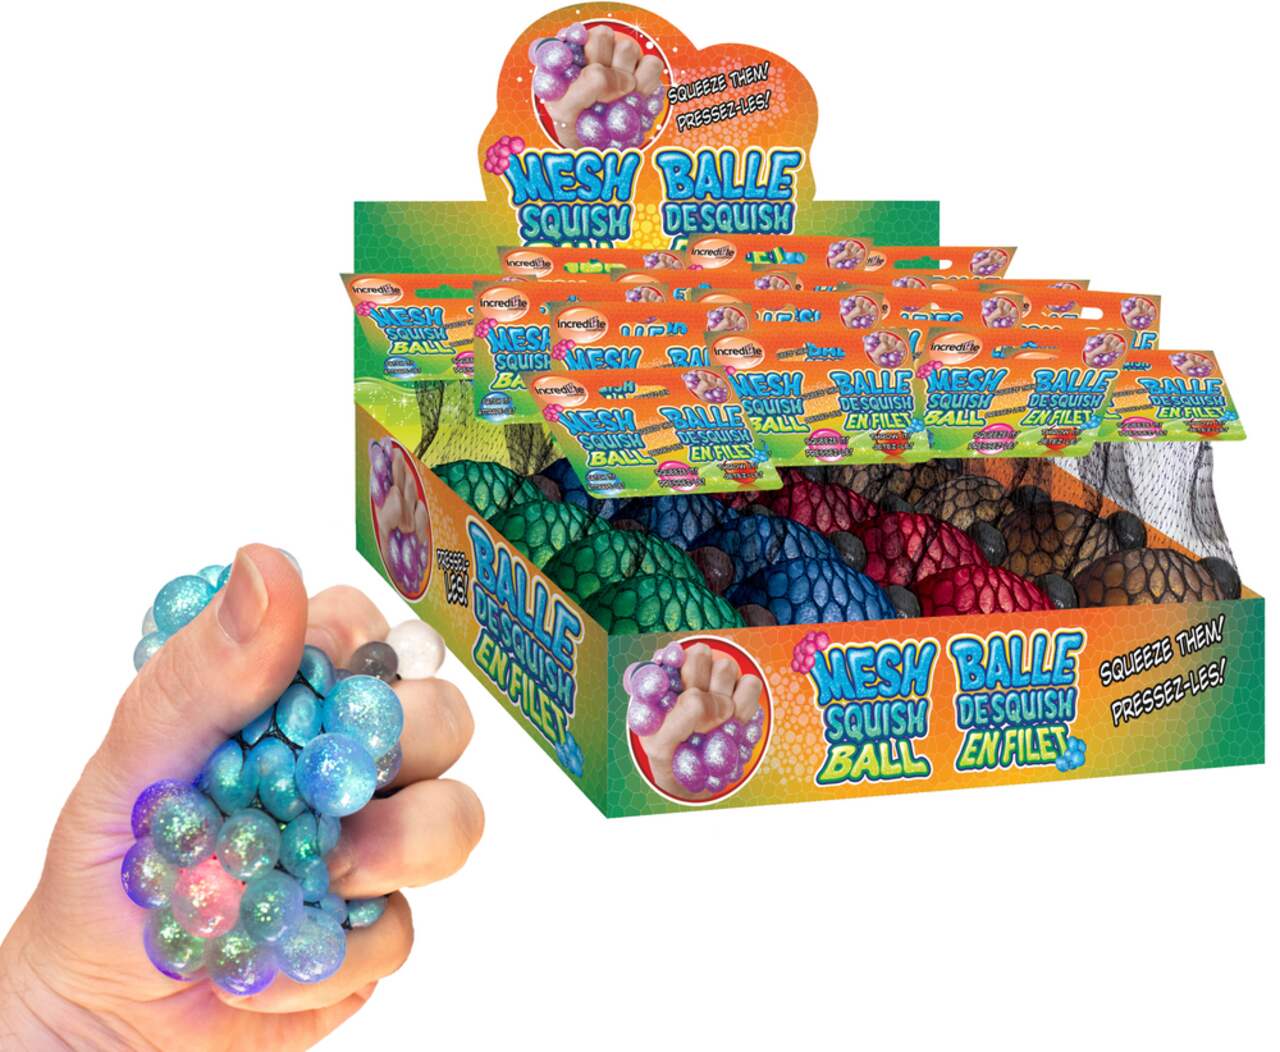 Balle Antistress Multicolore avec son Filet anti stress bulle au